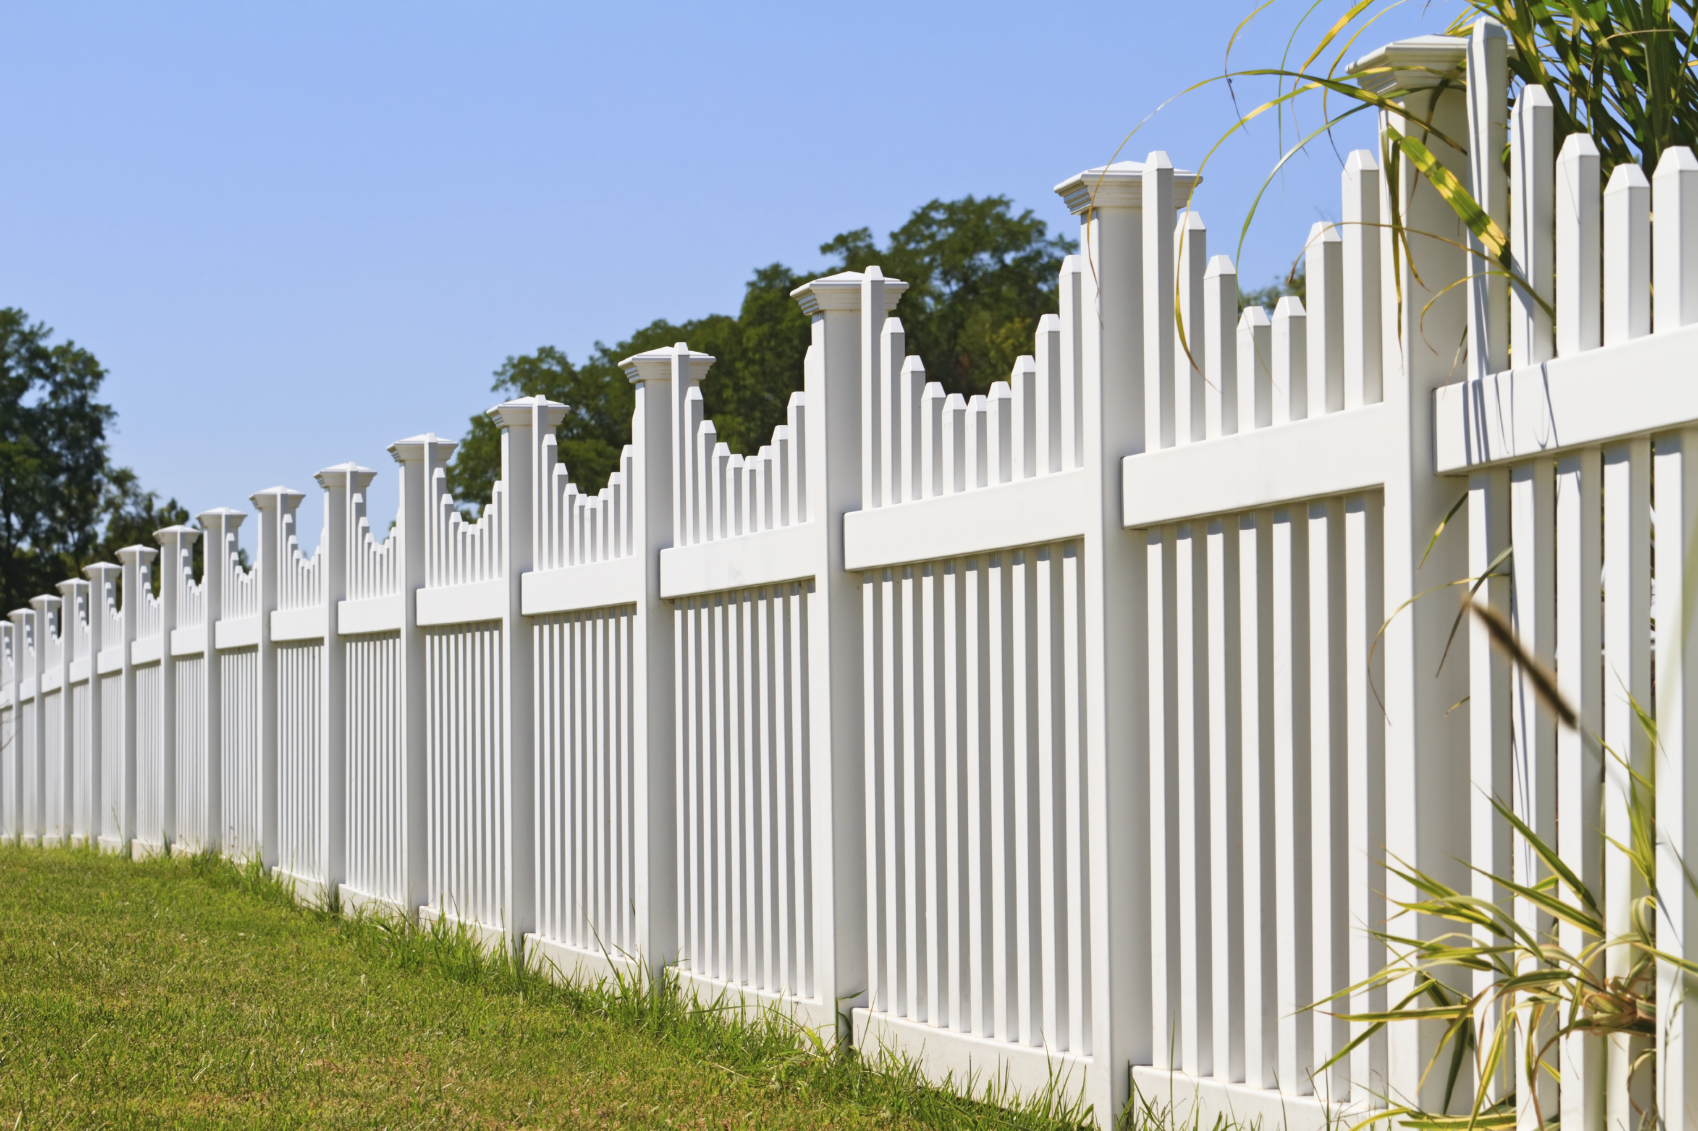 Fence Property Value